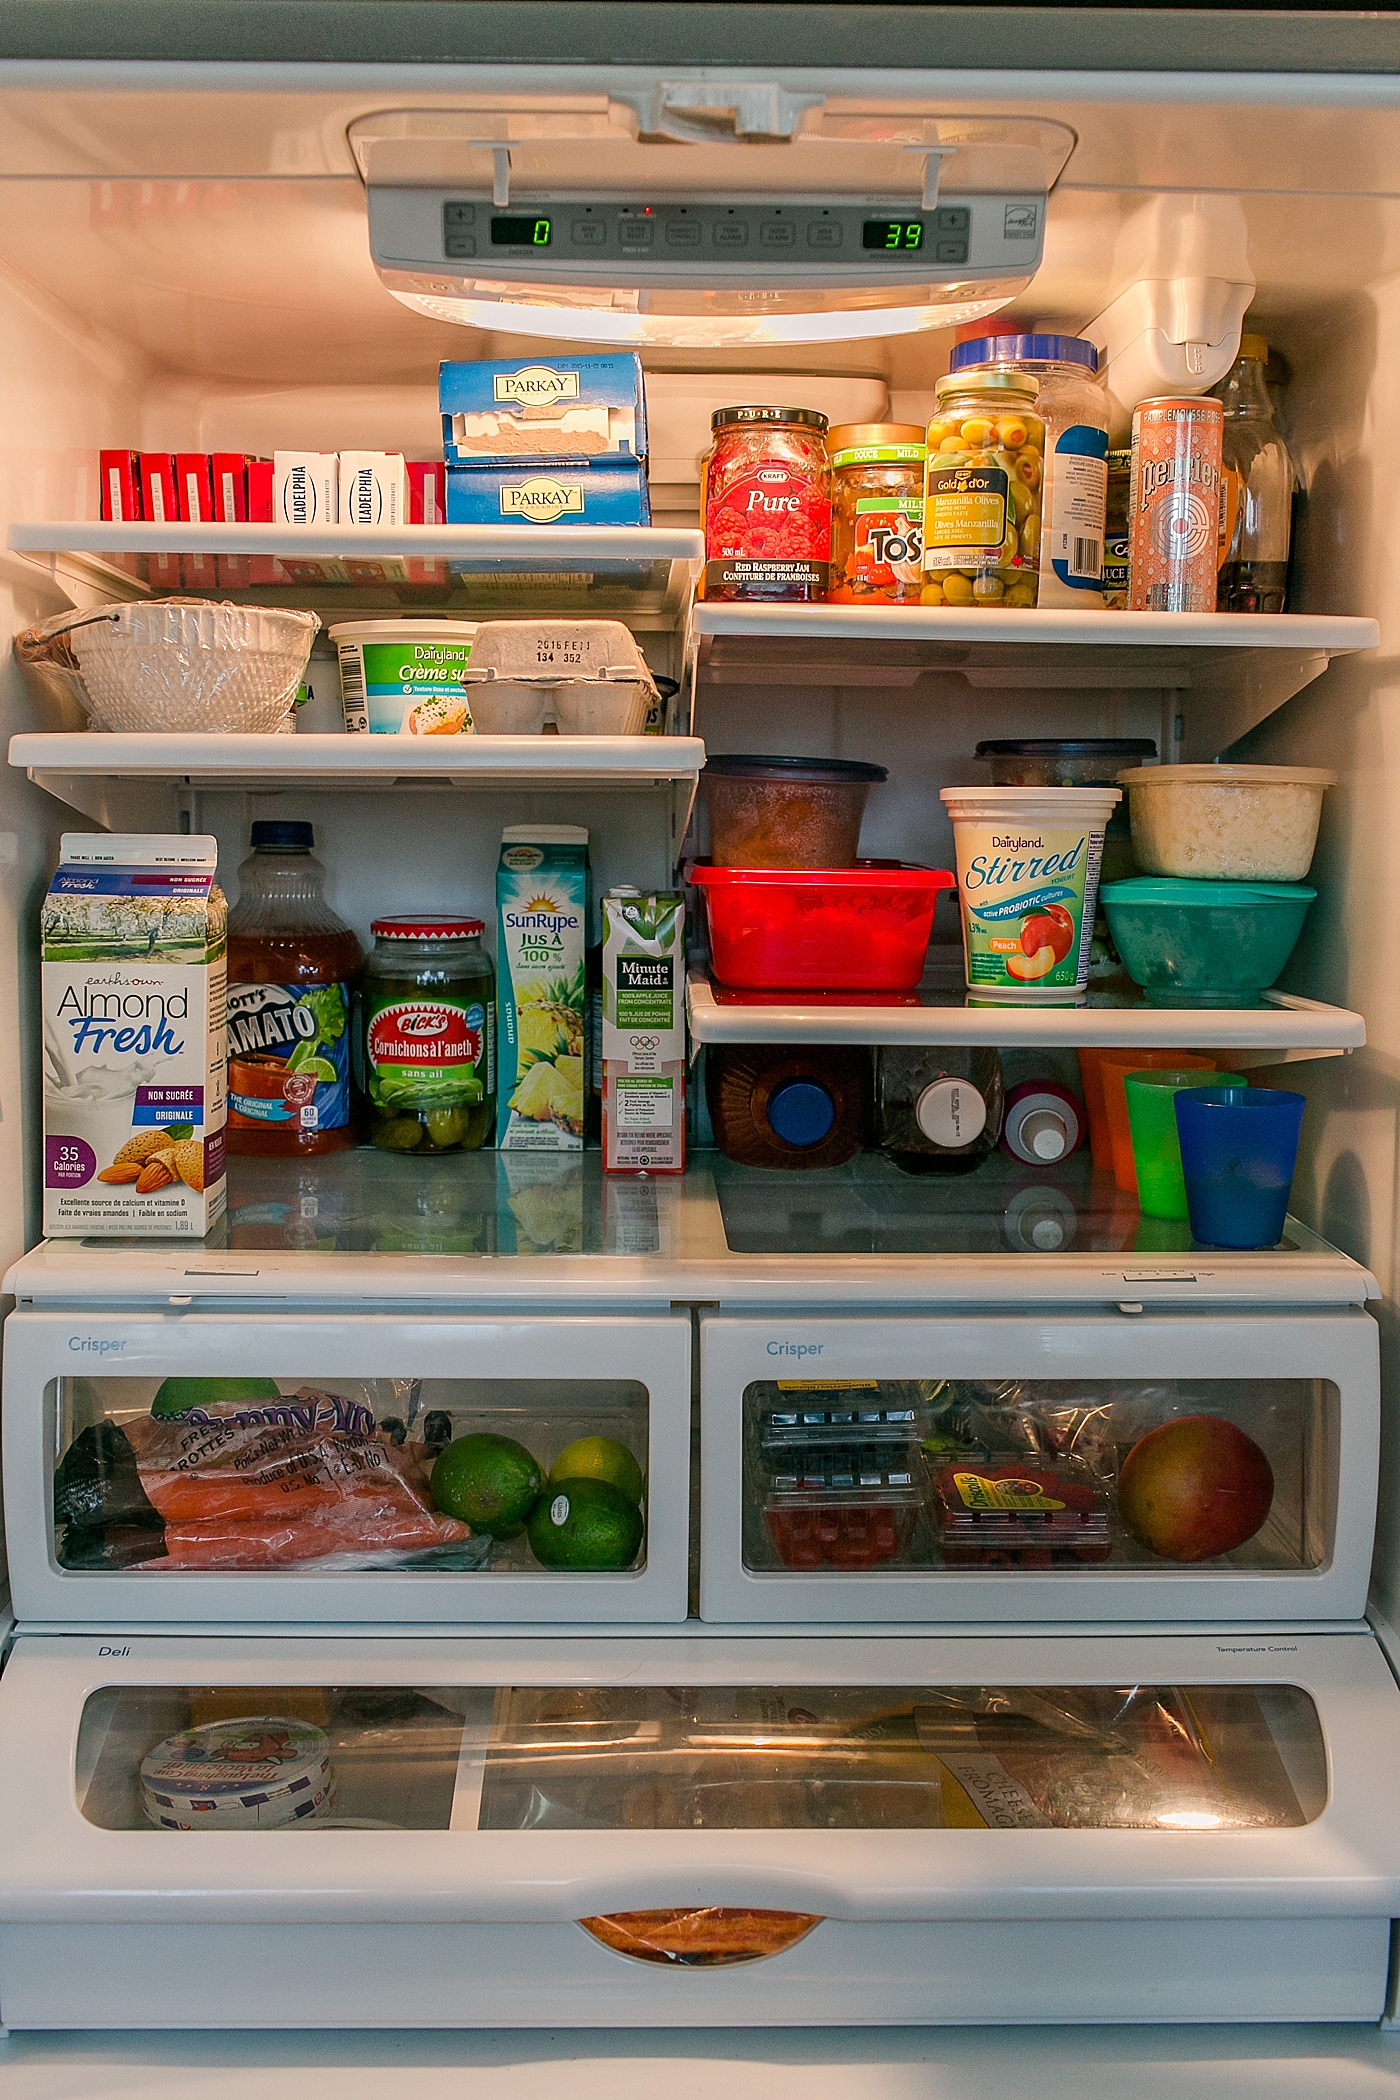 kitchenaid fridge loaded with healthy meals